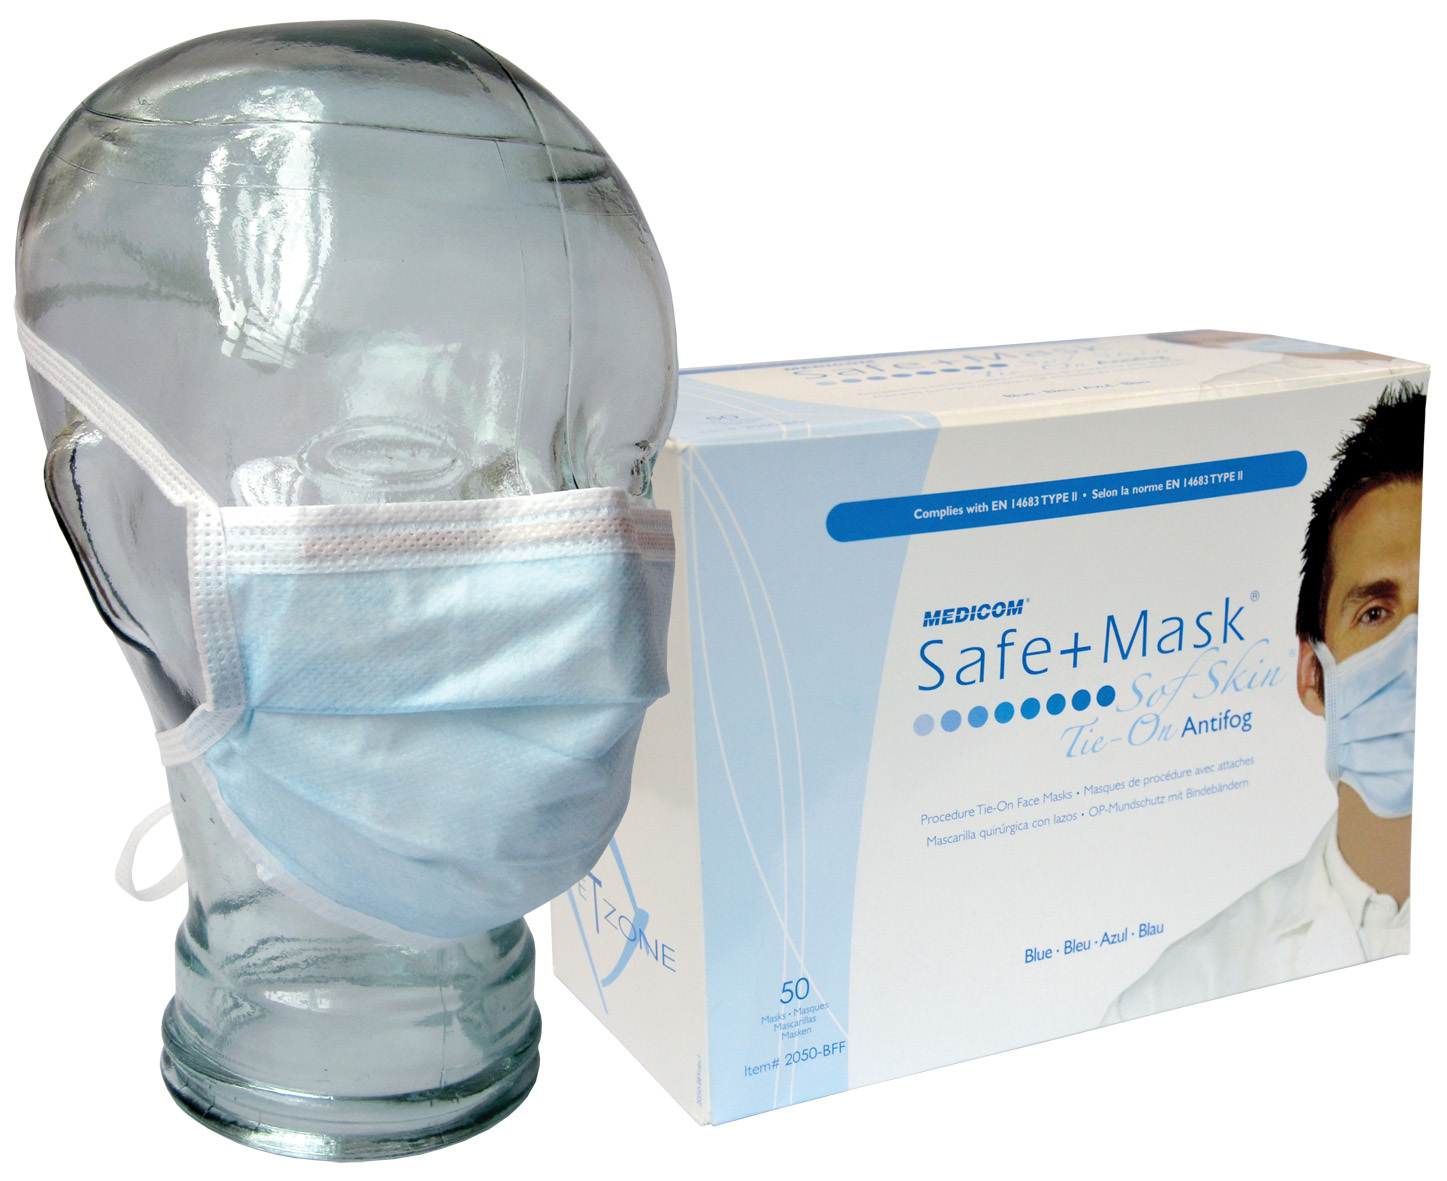 Medicom-Sofskin-Anti-Fog-Tie-on-Masks